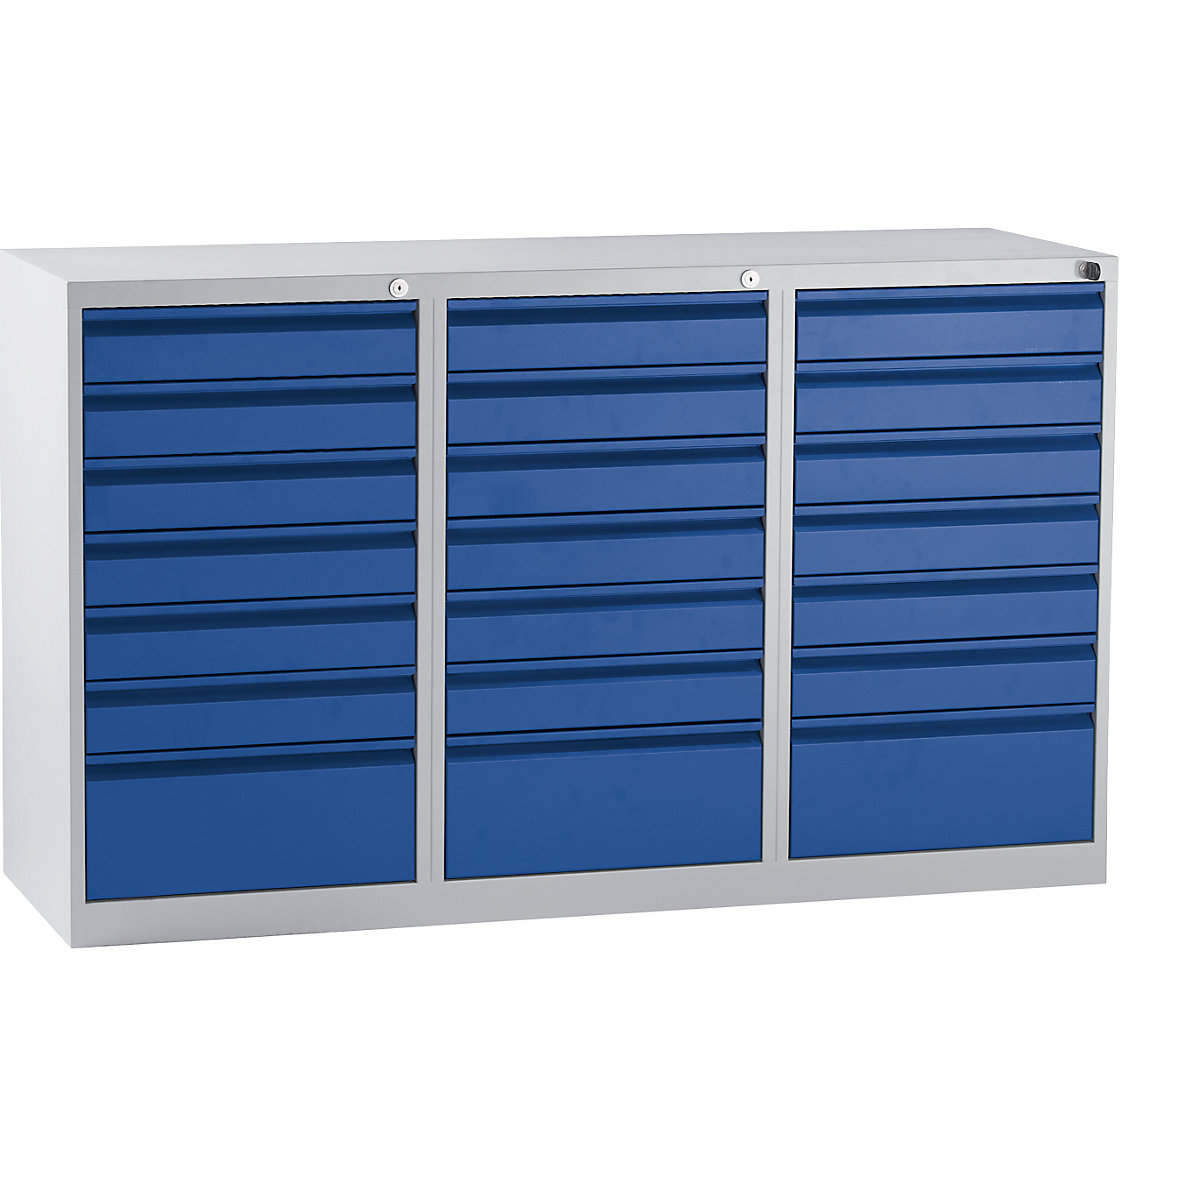 Drawer cupboard, steel – eurokraft basic